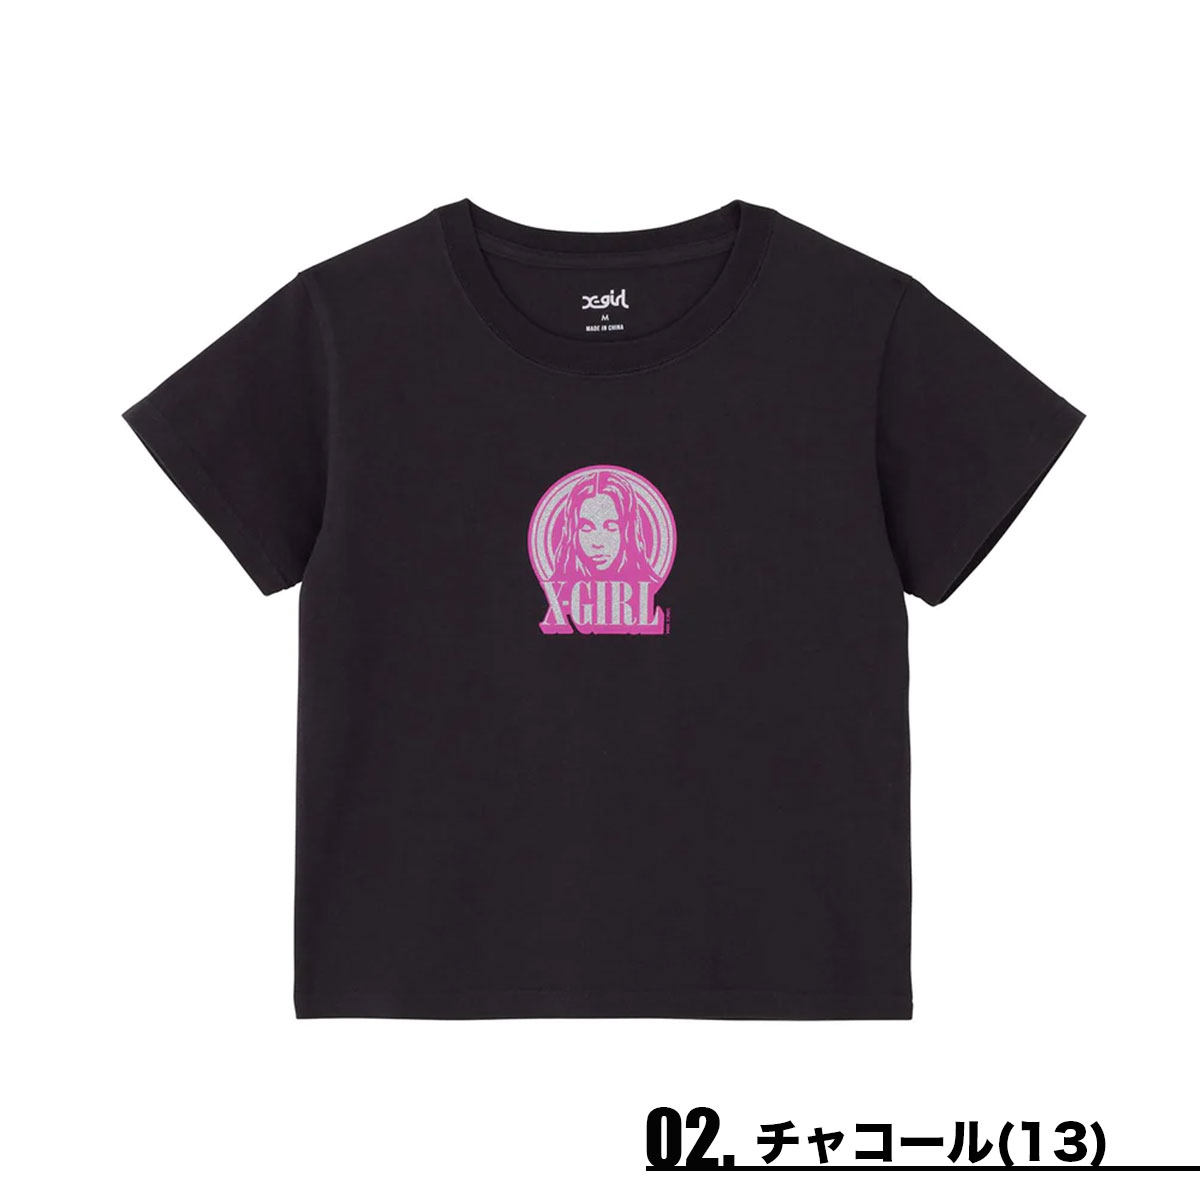 Xgirl Tシャツ ワンピース 黒